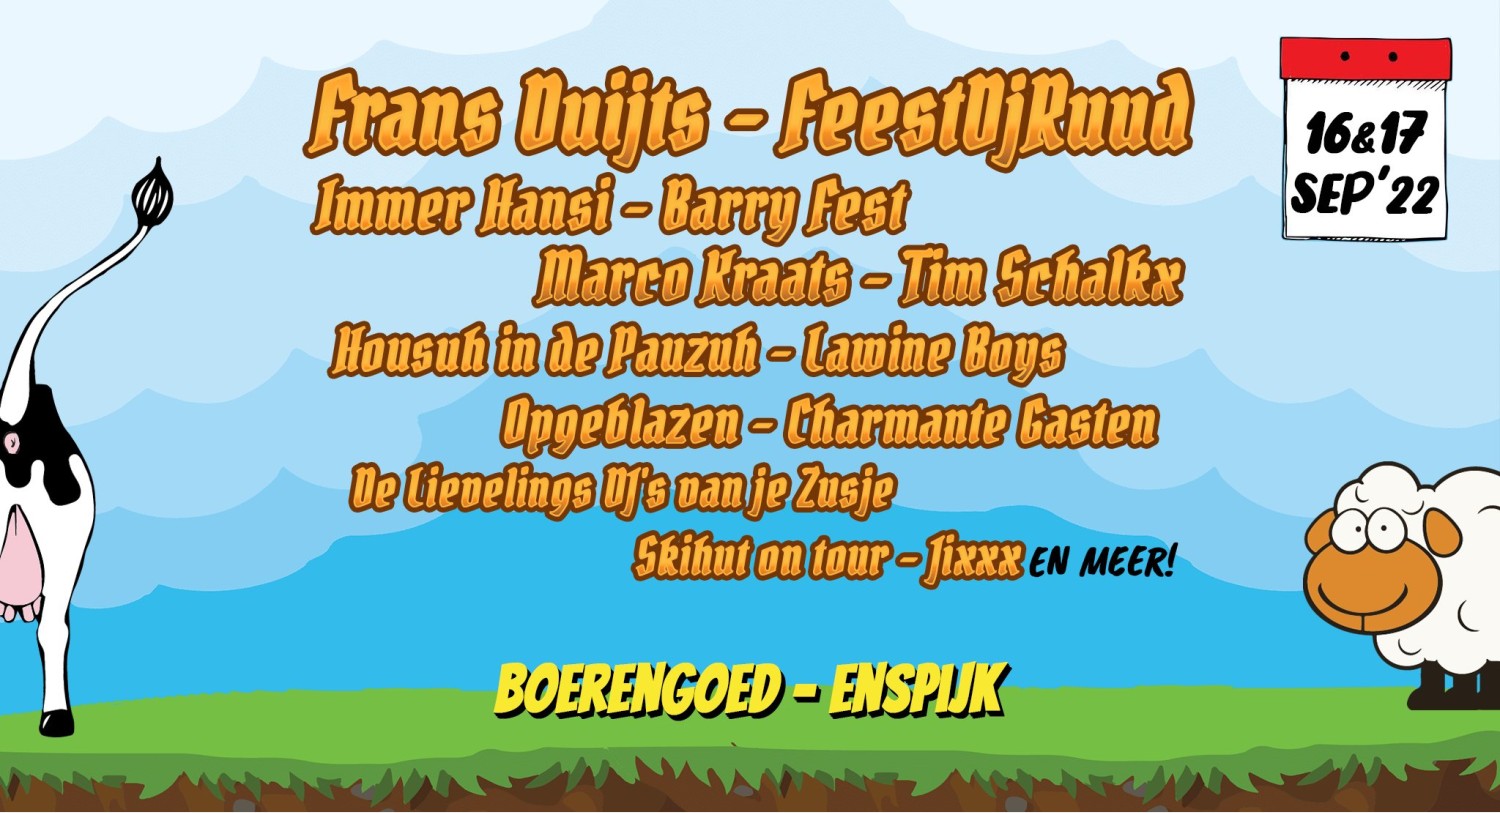 BuitenGewoon Festival 2022